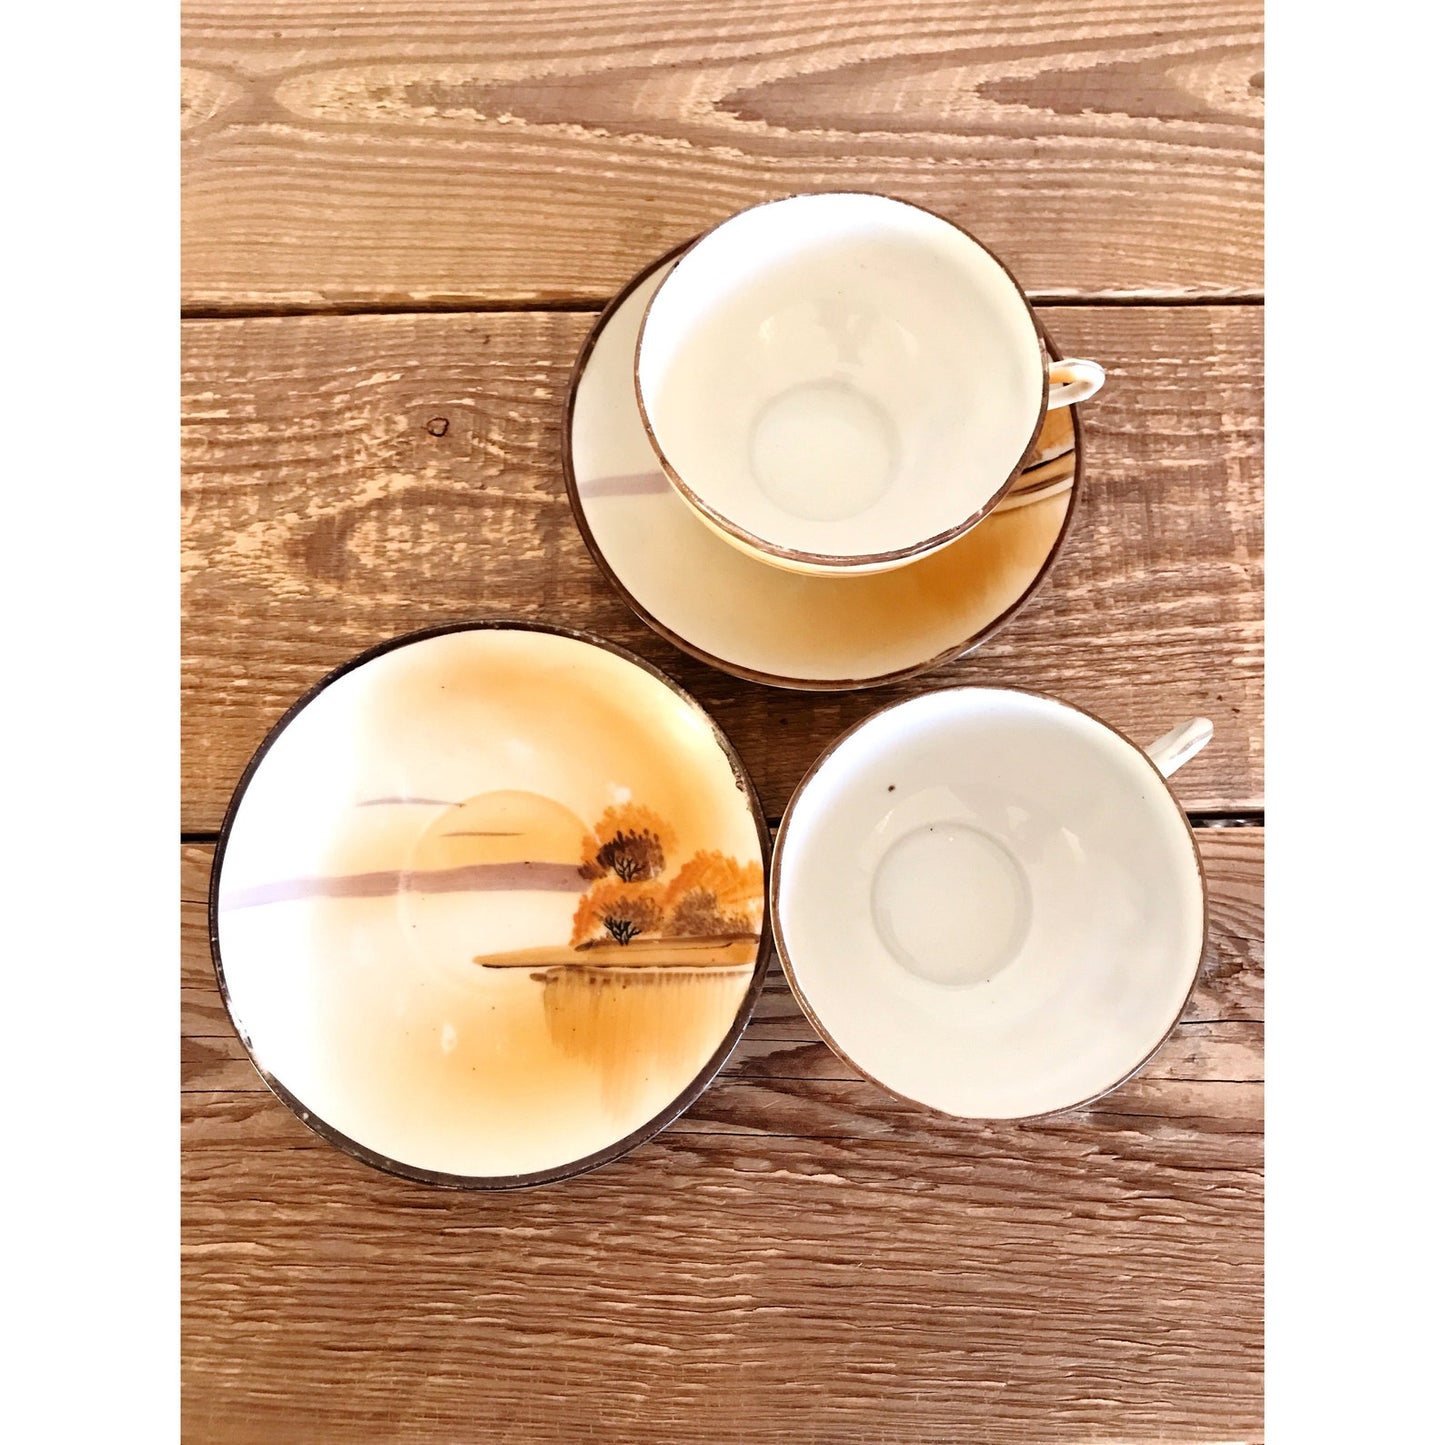 Pair of Hand Painted TT Japan Tea Cups & Snack Plates